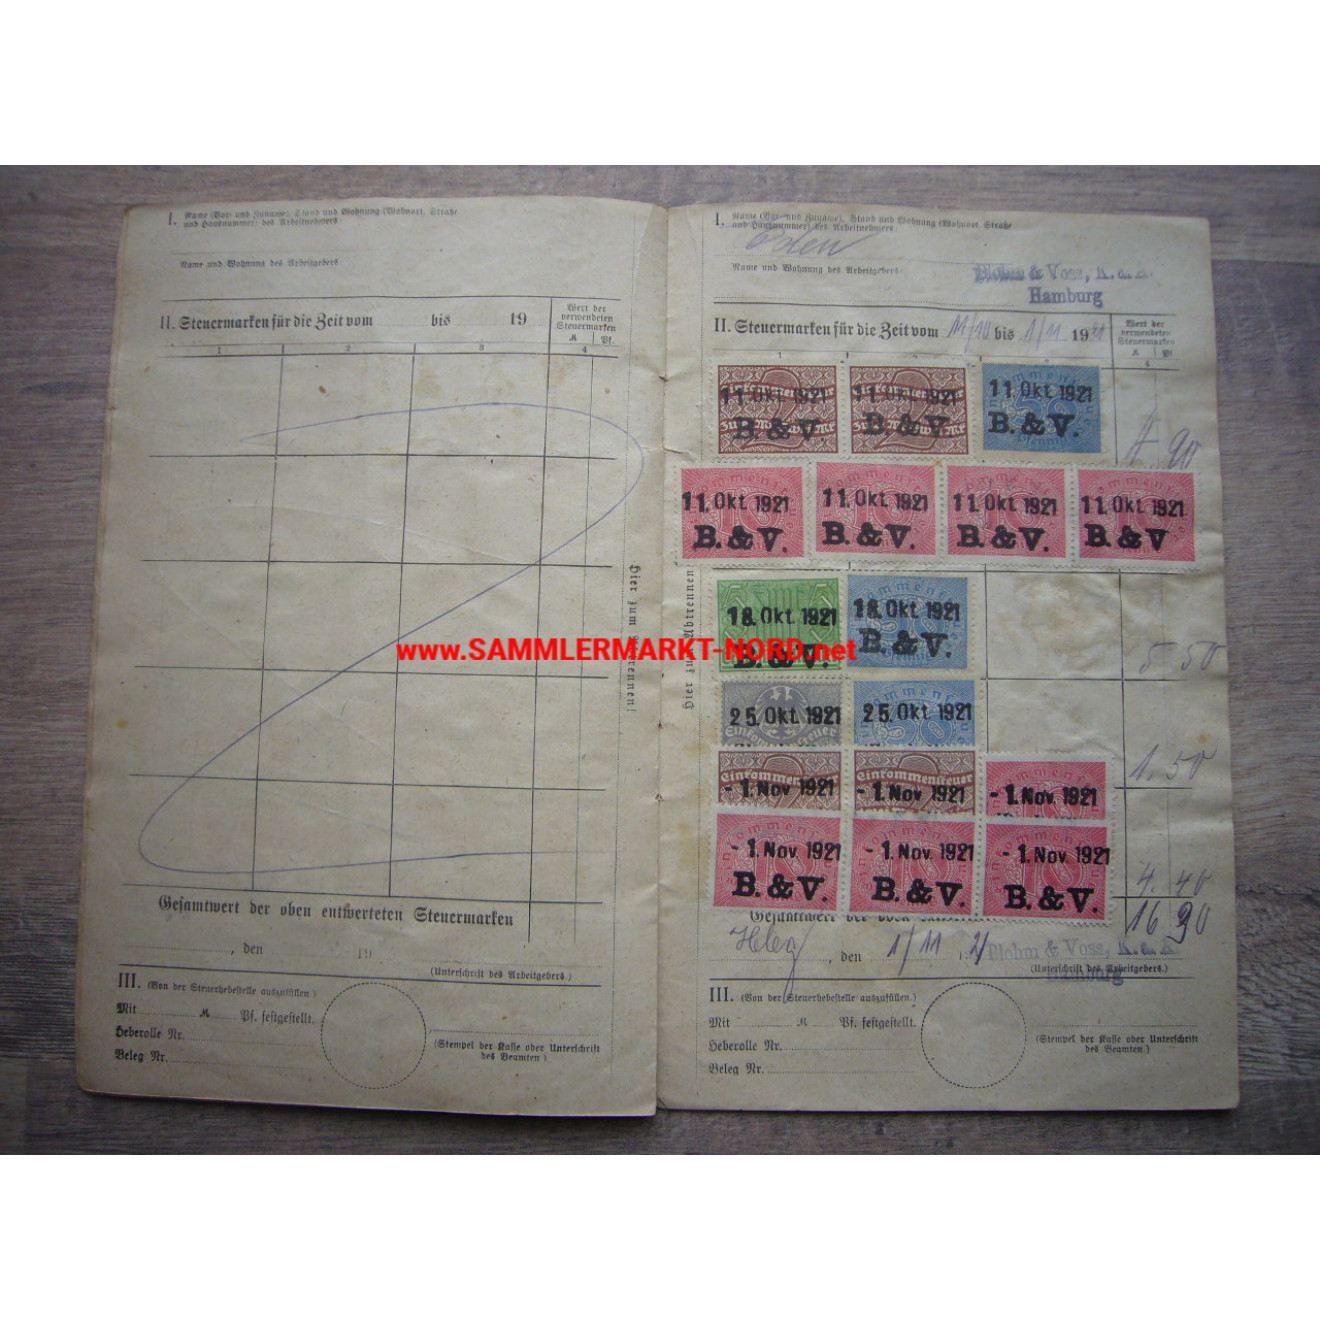 Blohm & Voss shipyard, Hamburg - tax card / identity card 1920